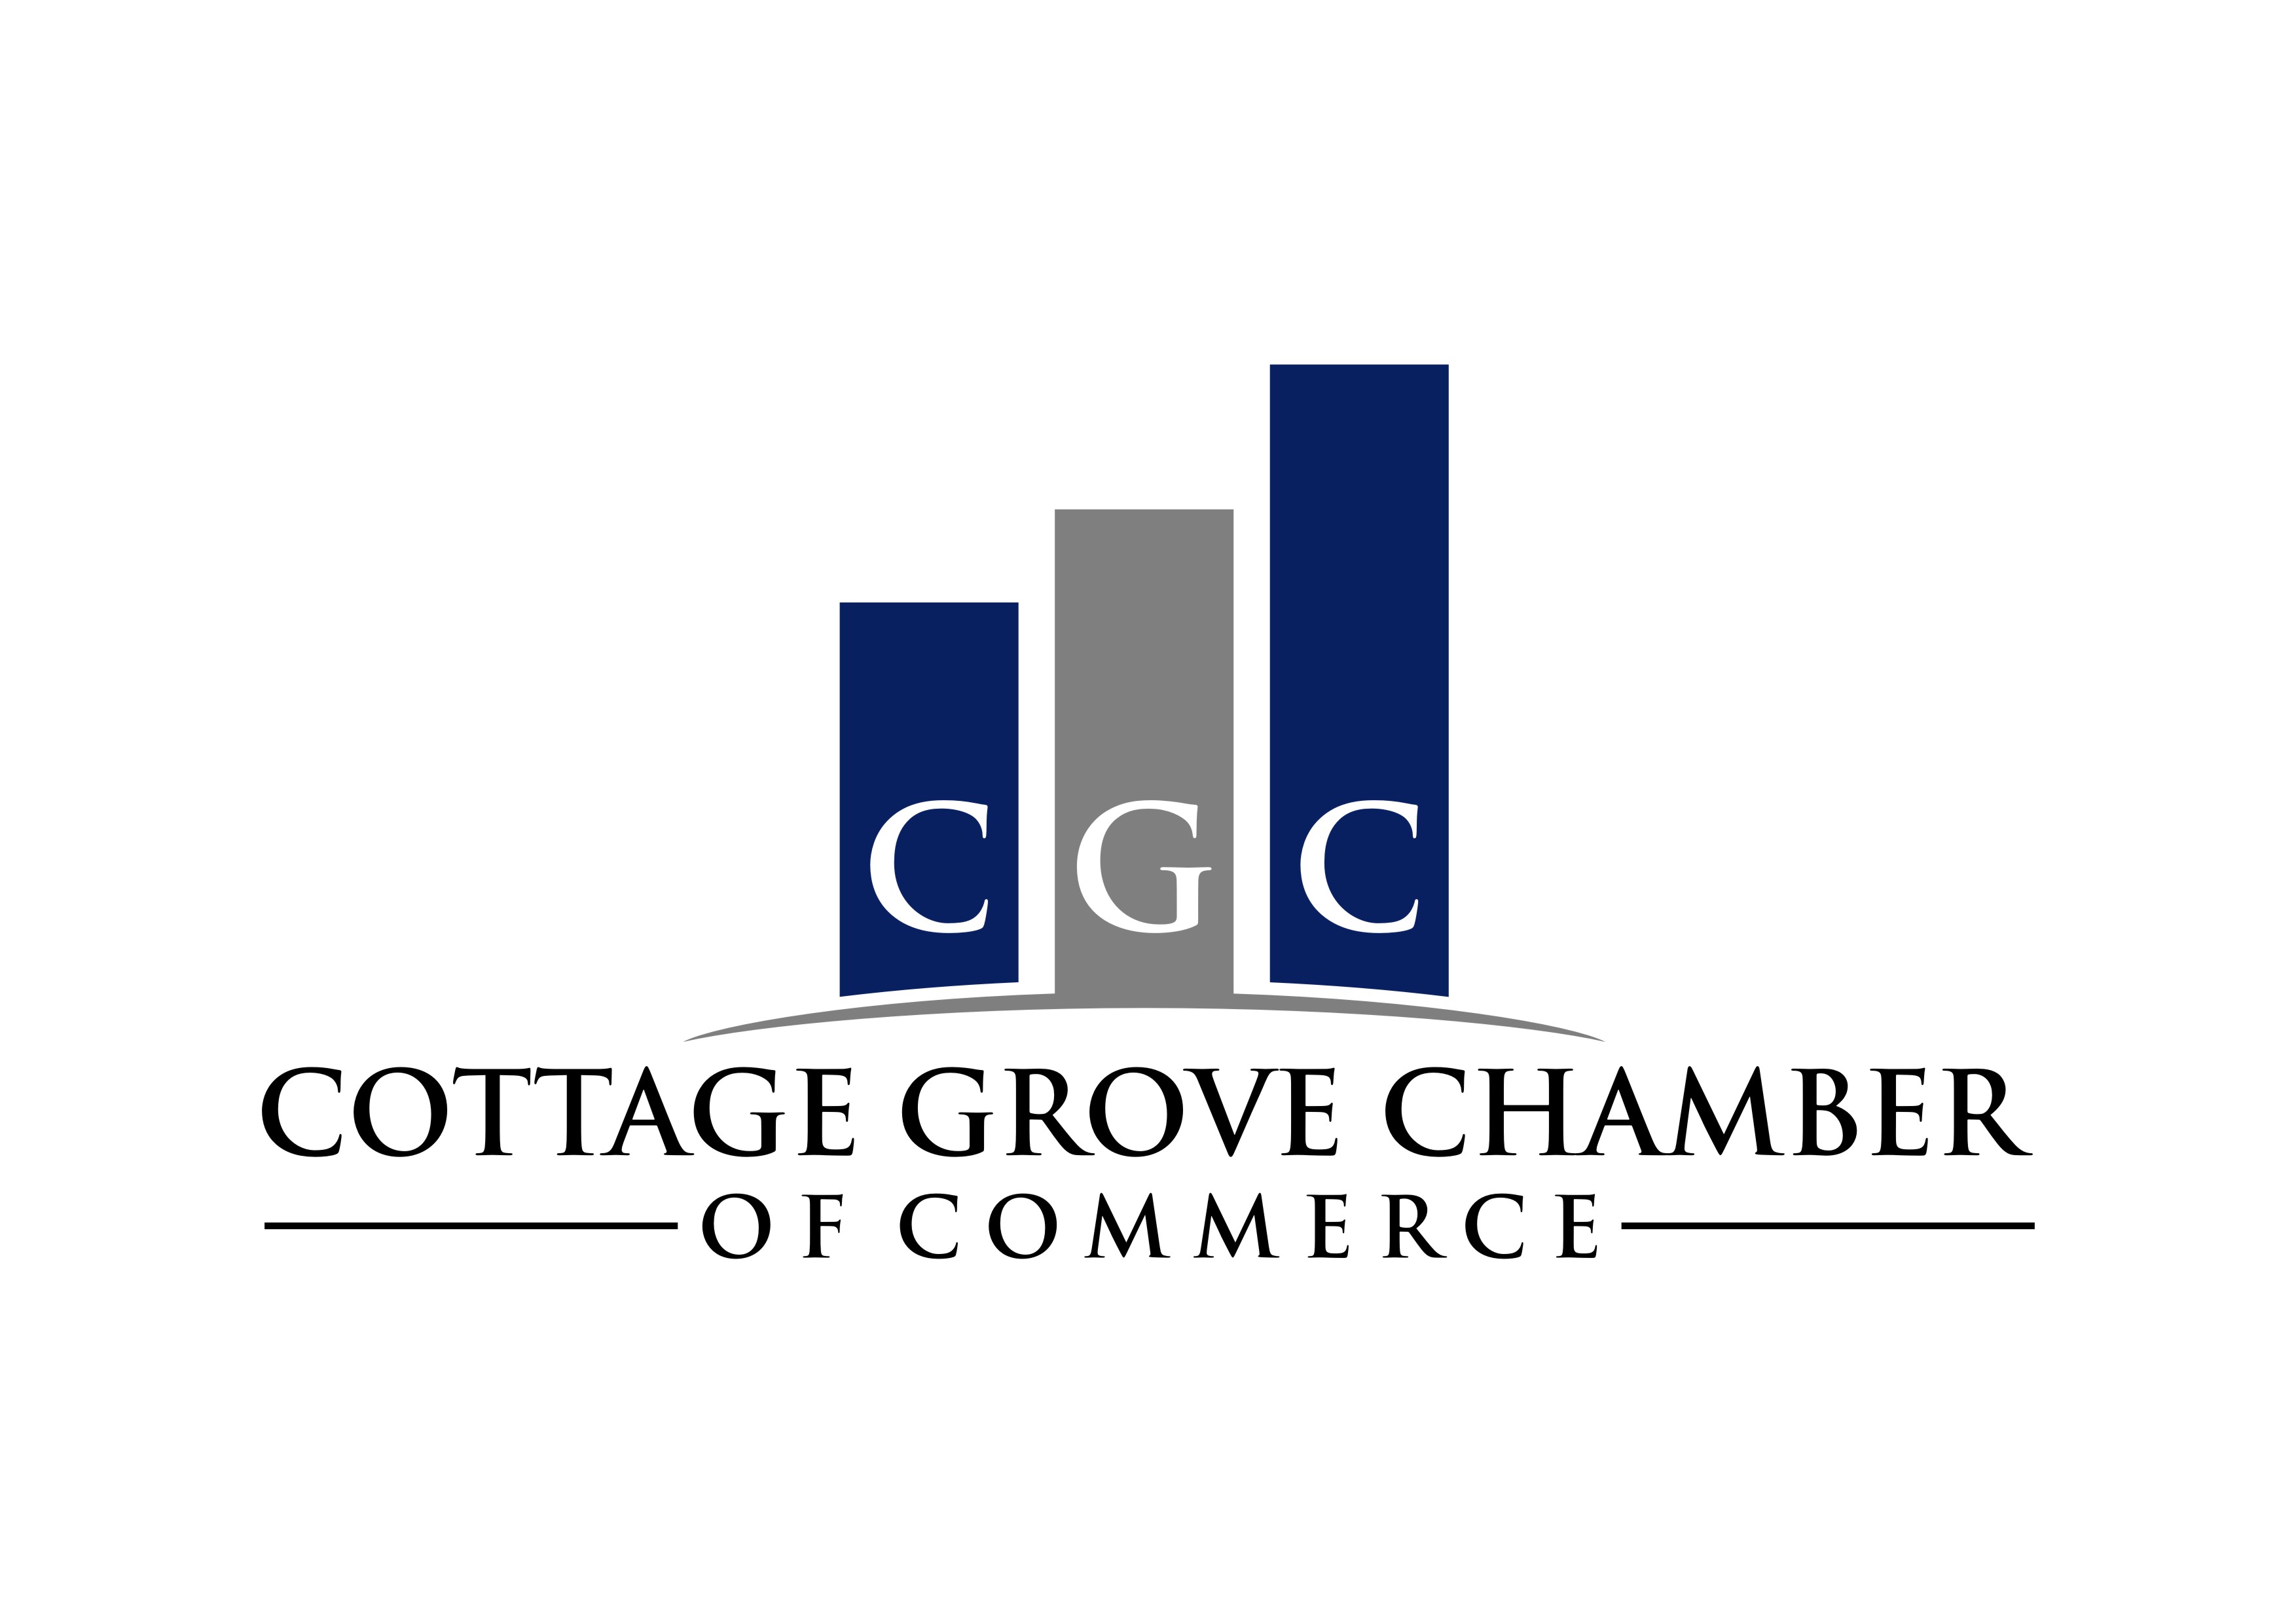 CGCC Logo